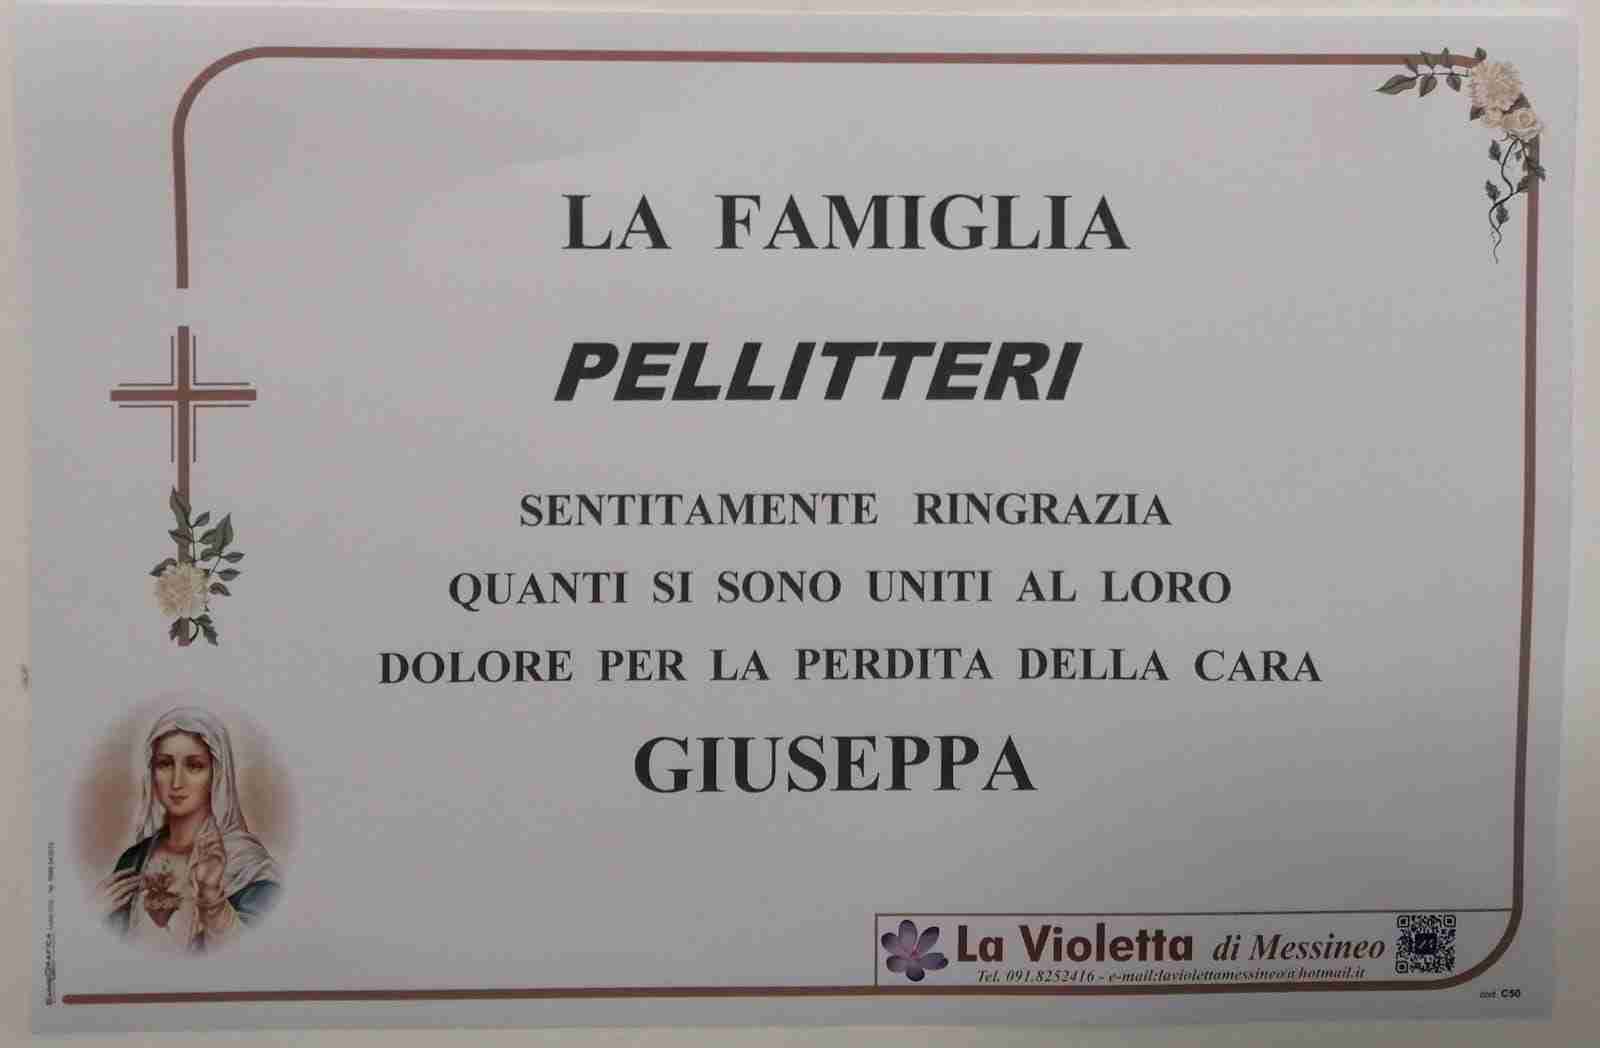 Giuseppa Pellitteri